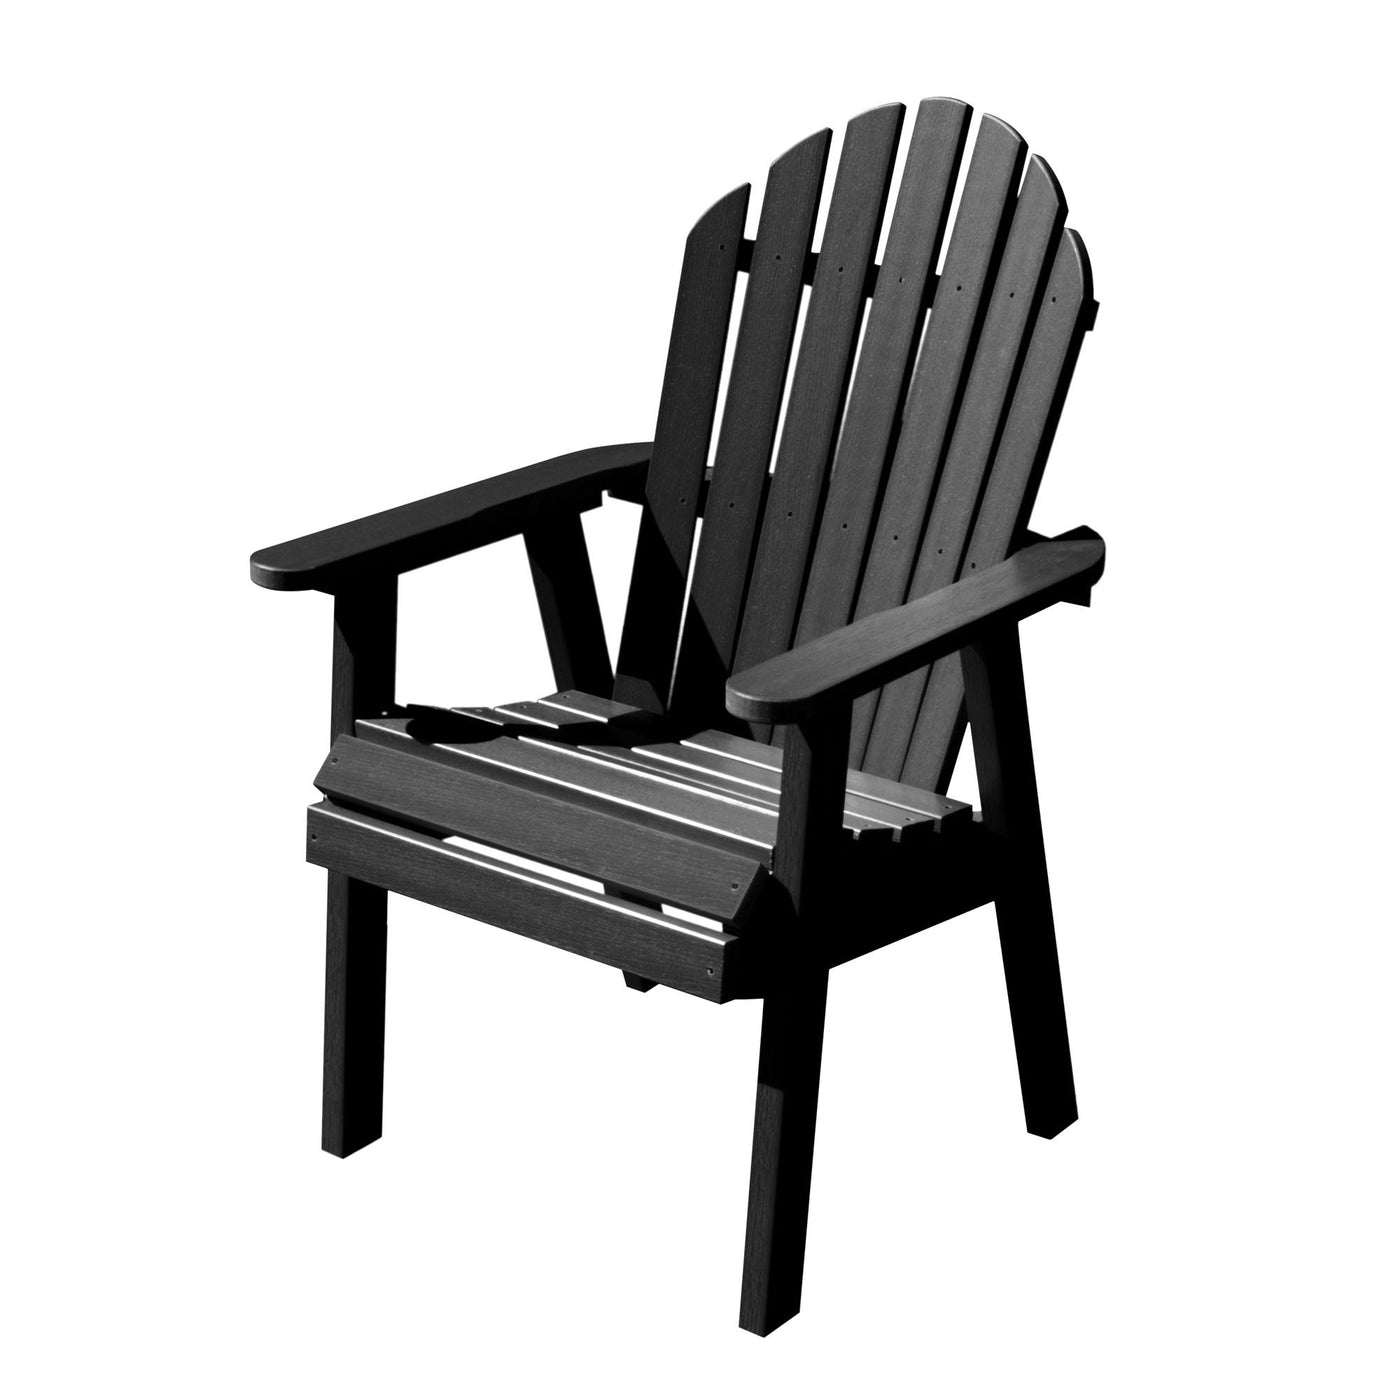 Refurbished Hamilton Deck Chair Highwood USA 